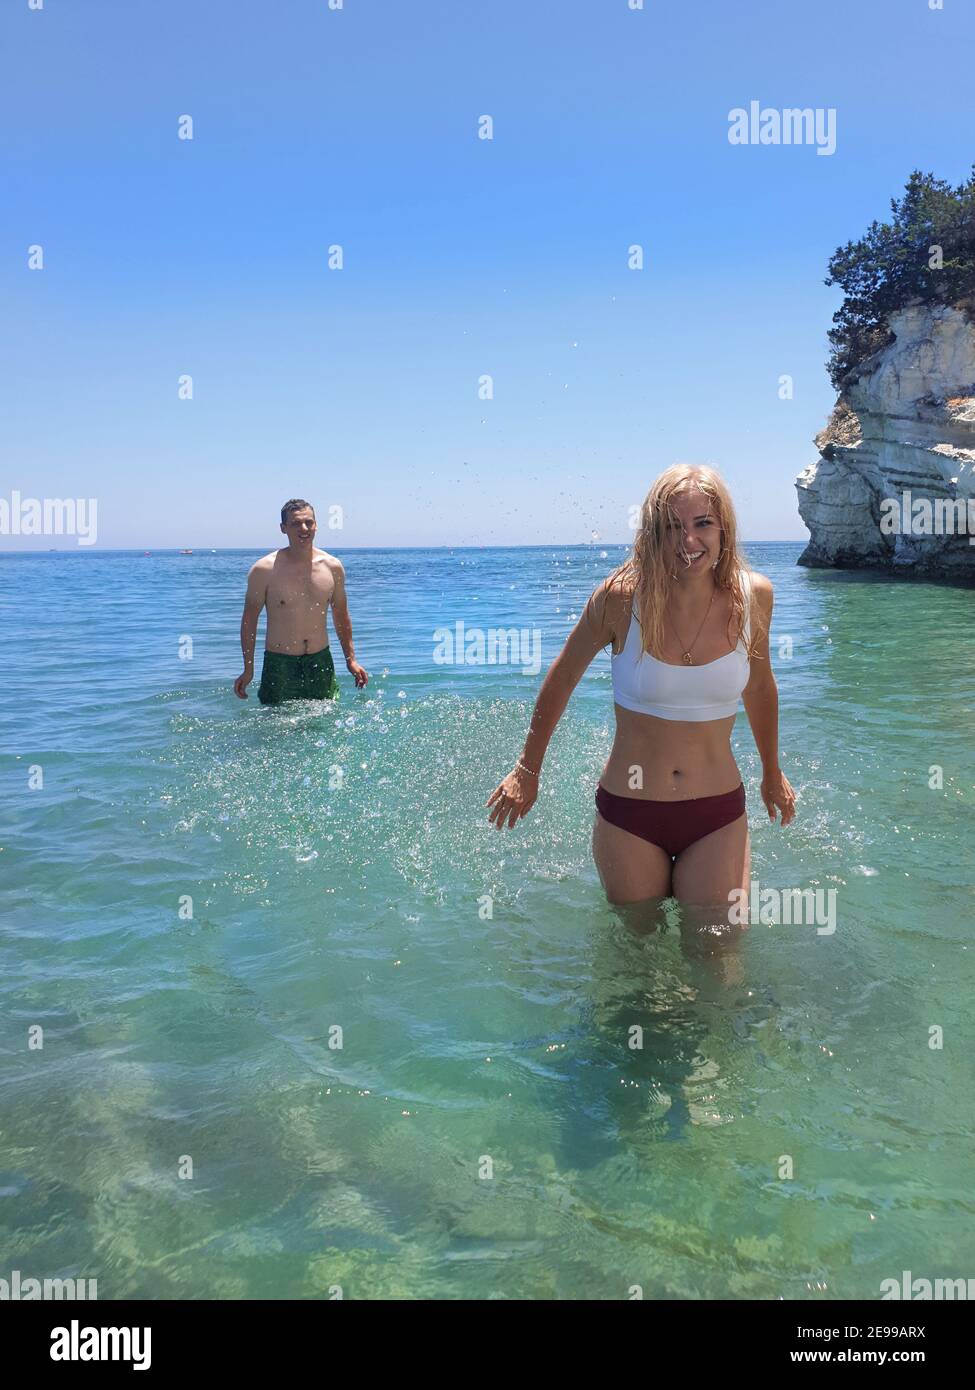 Mujeres bikini transparente fotografías e imágenes de alta resolución - Alamy